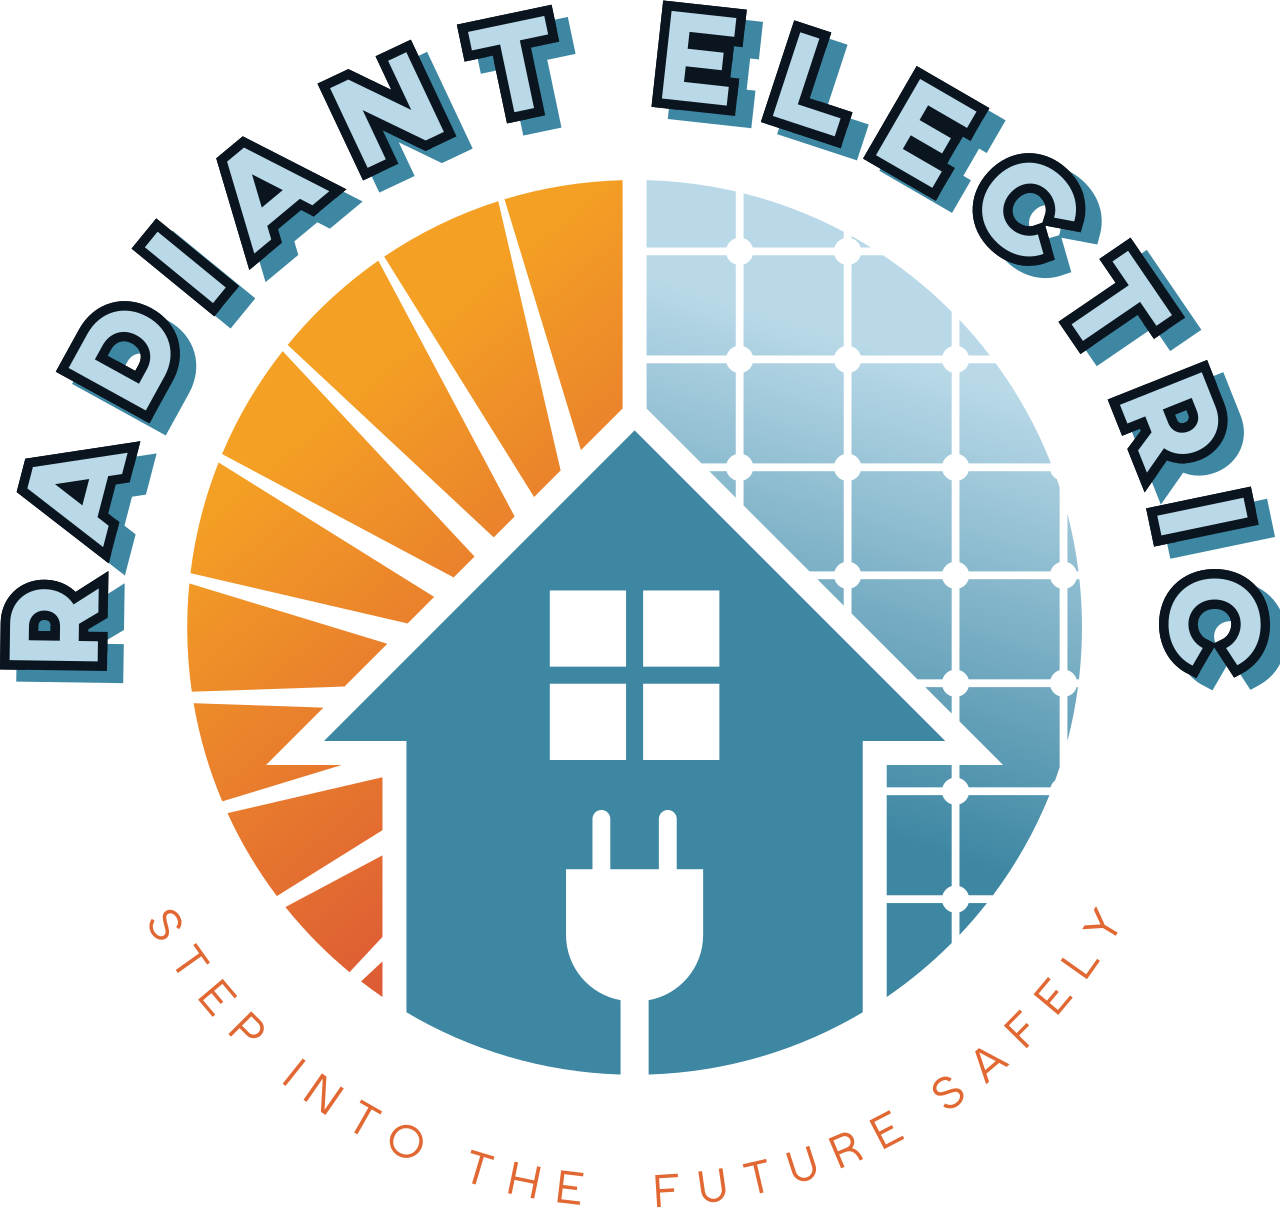 RADIANT ELECTRIC's logo